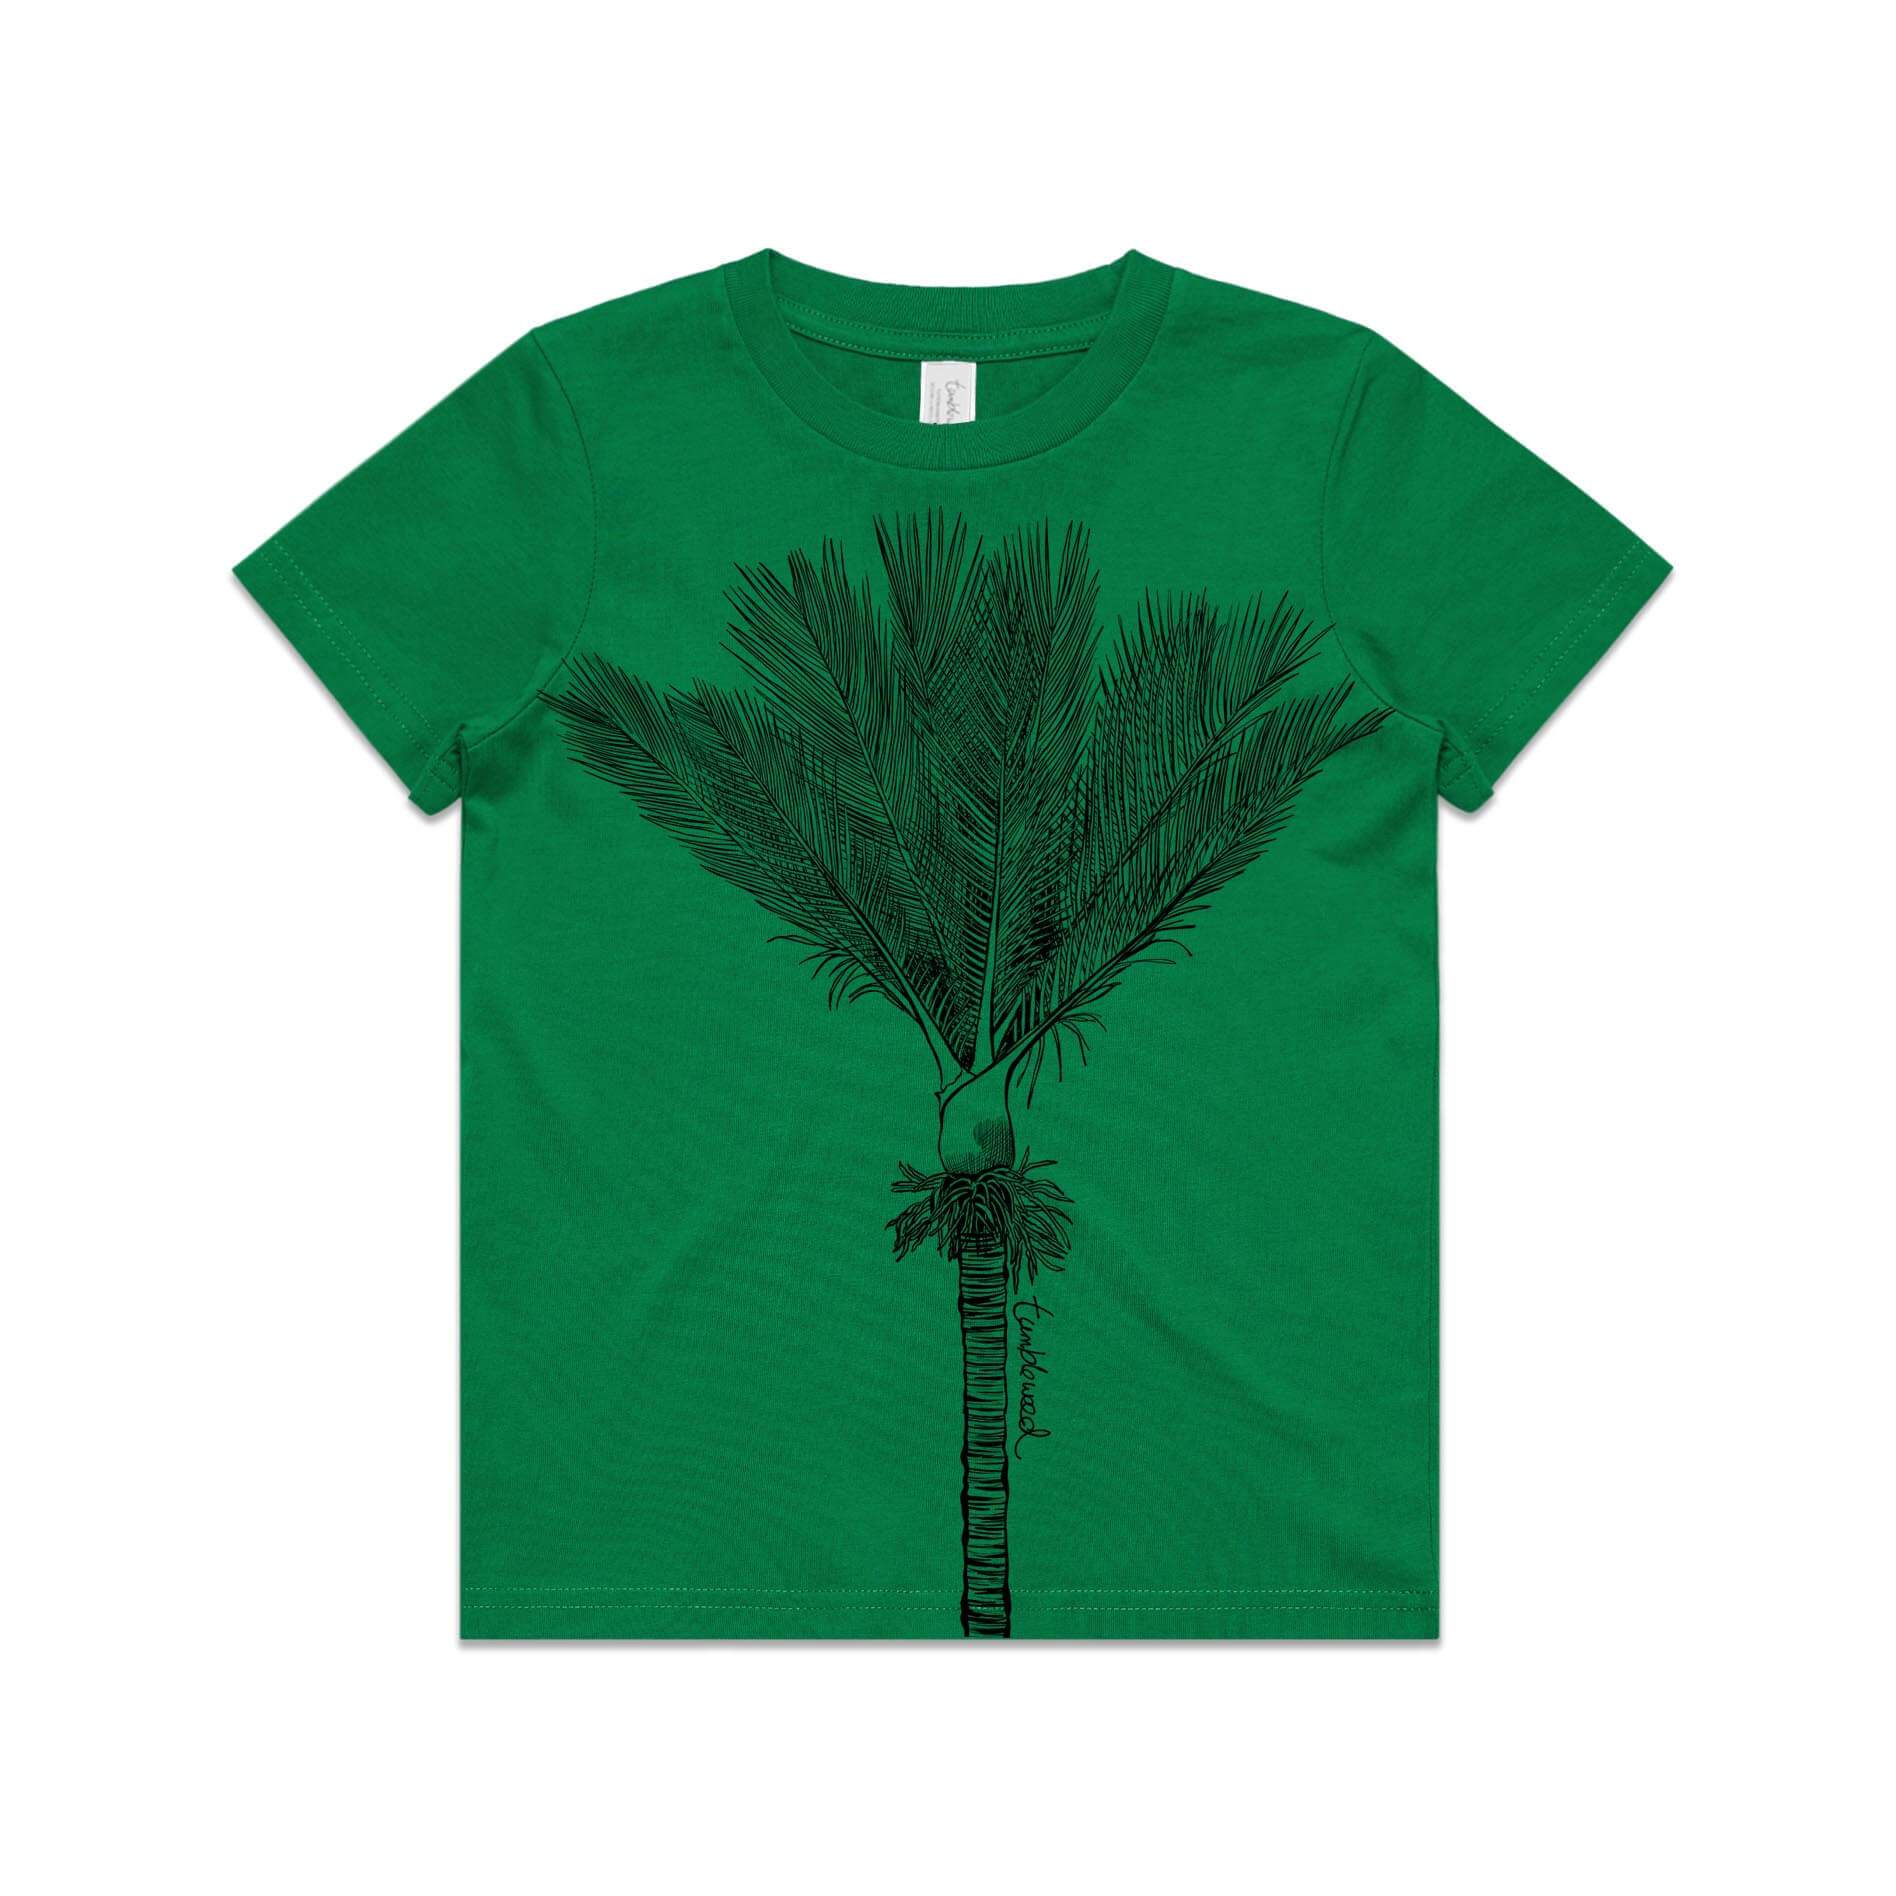 Green, cotton kids' t-shirt with screen printed nīkau design.